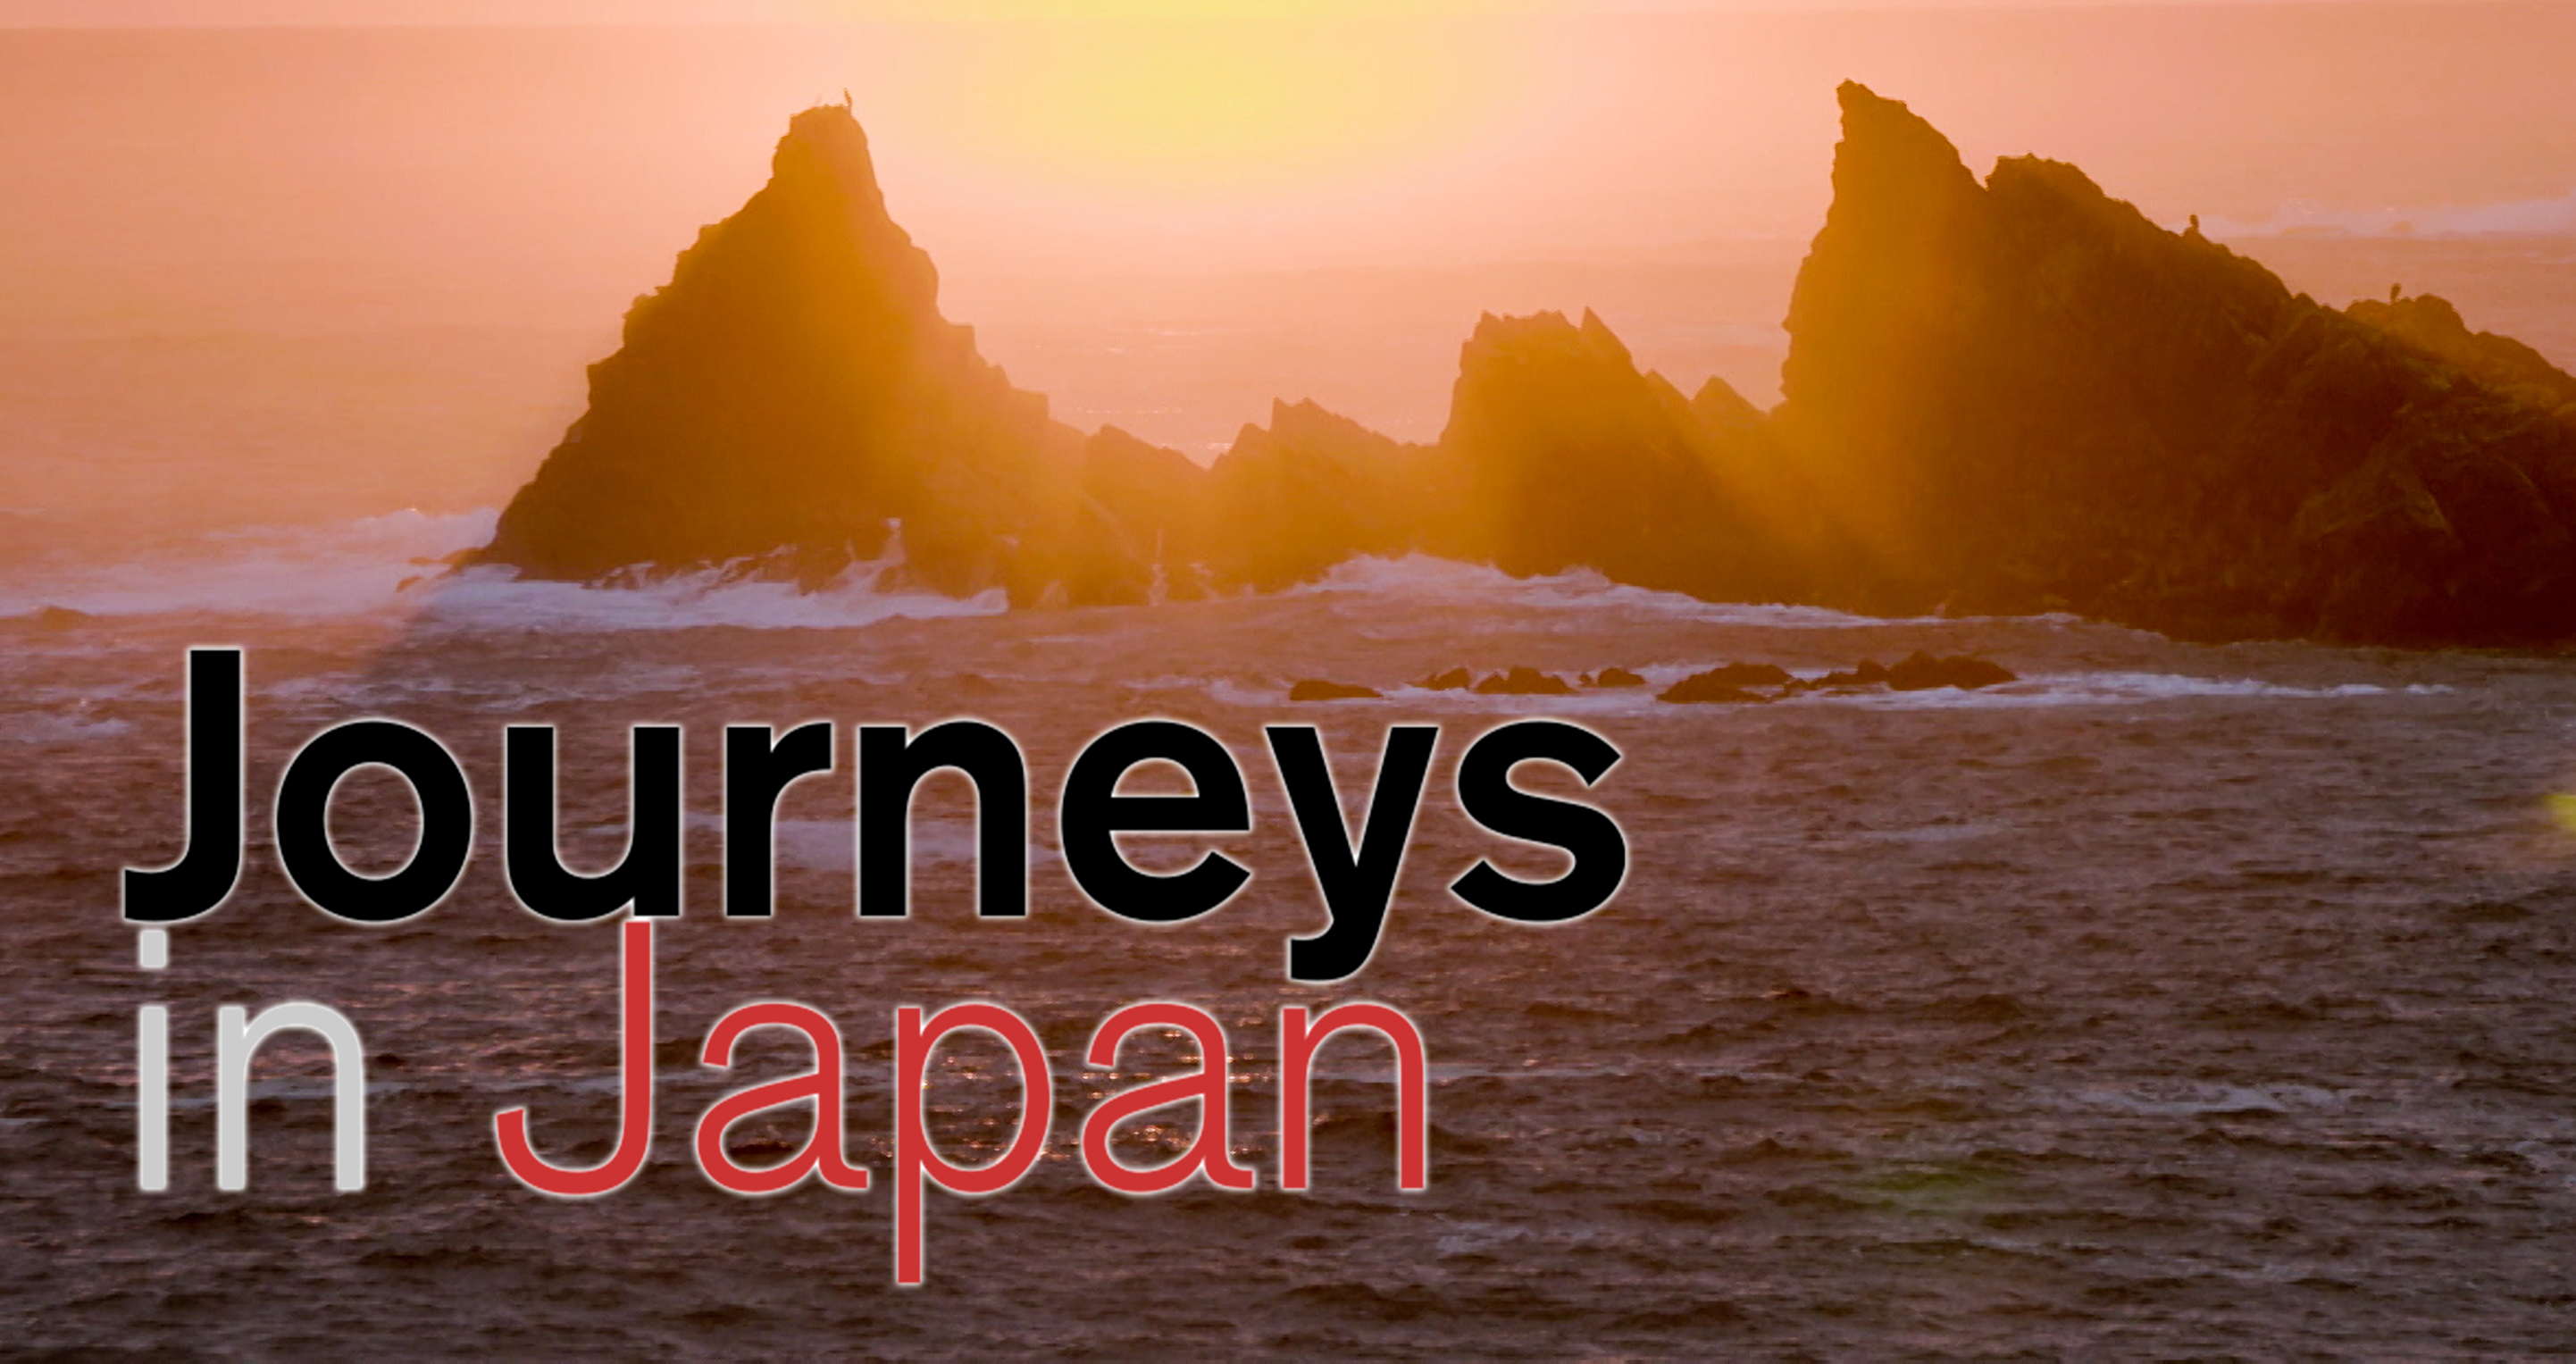 Journeys in Japan graphic